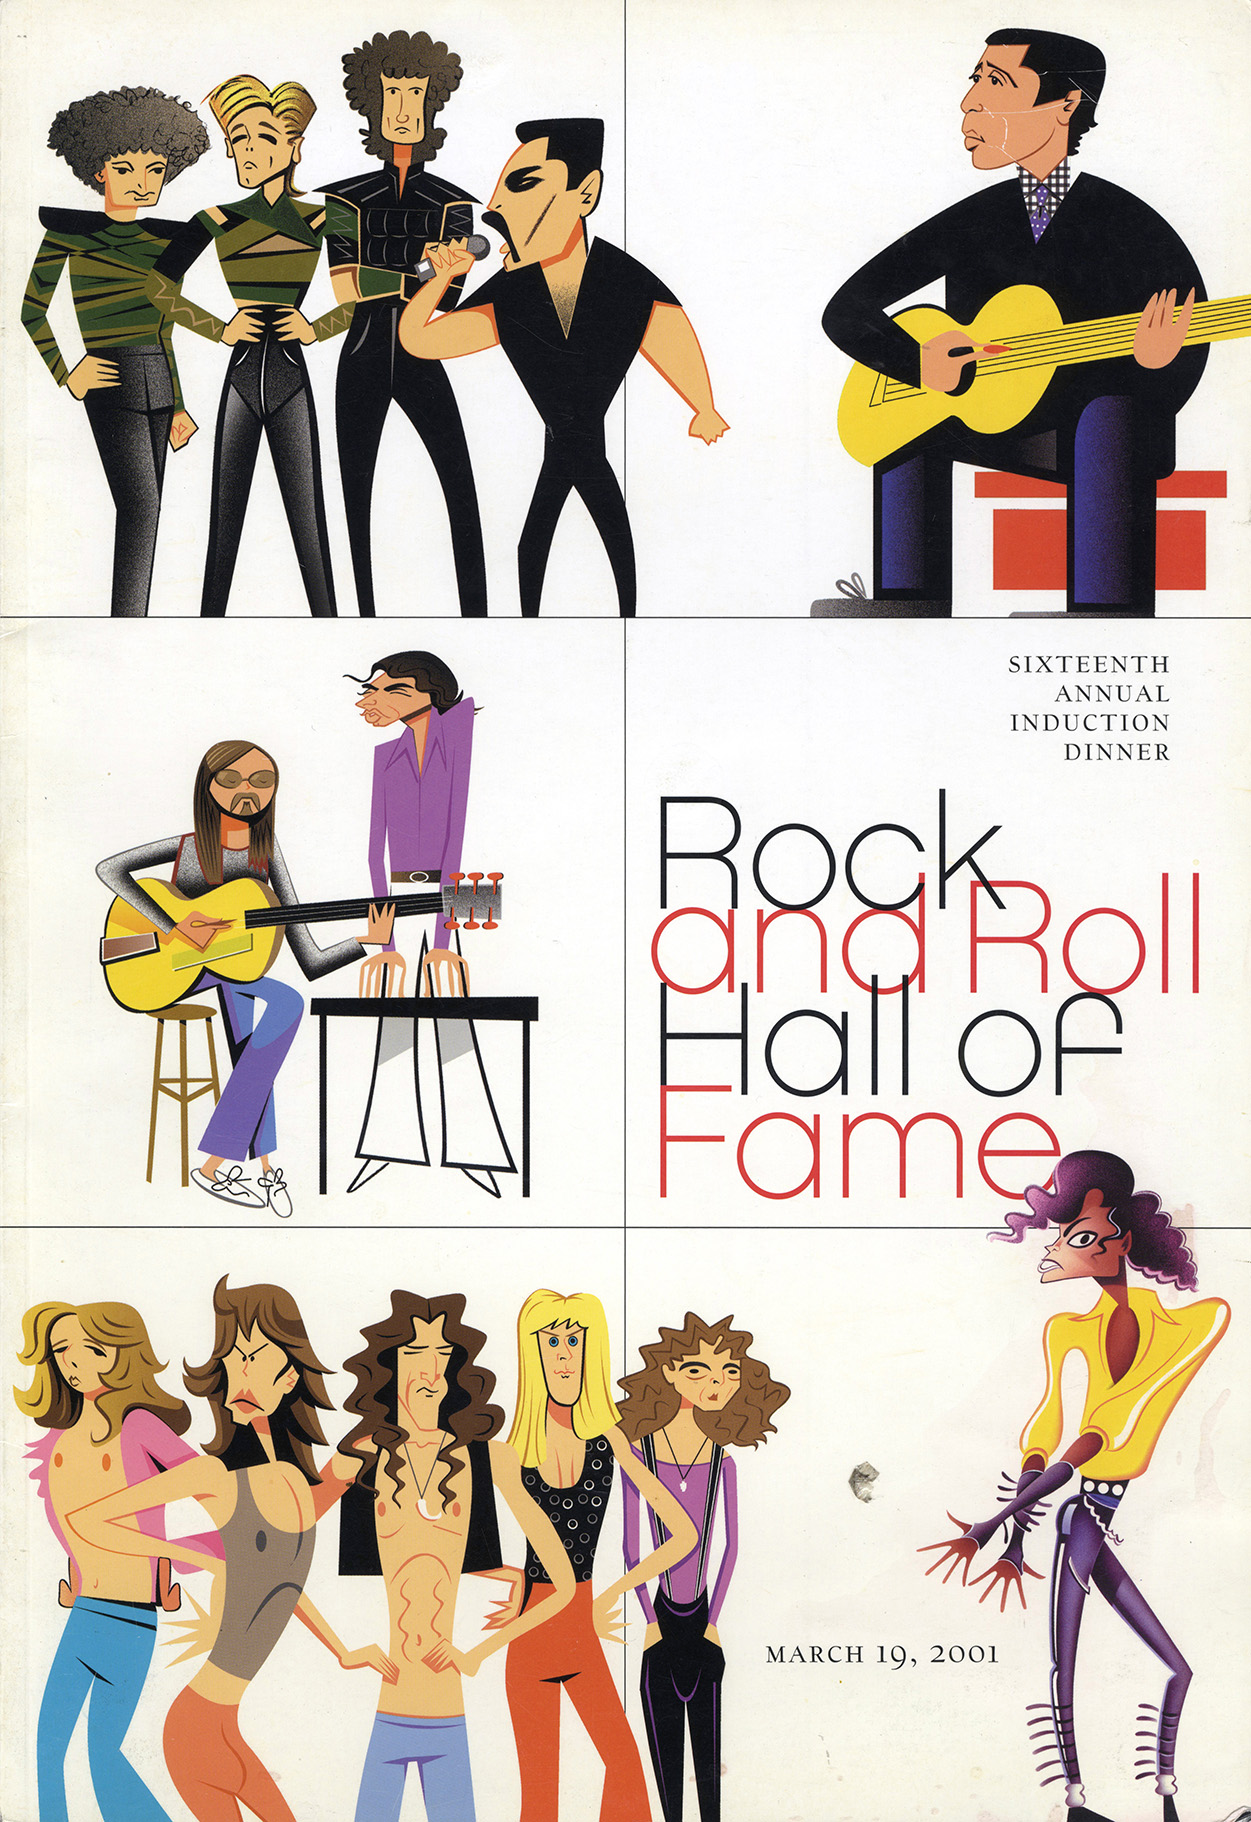 Rock'n'roll Hall Of Fame program (19.3.2001)